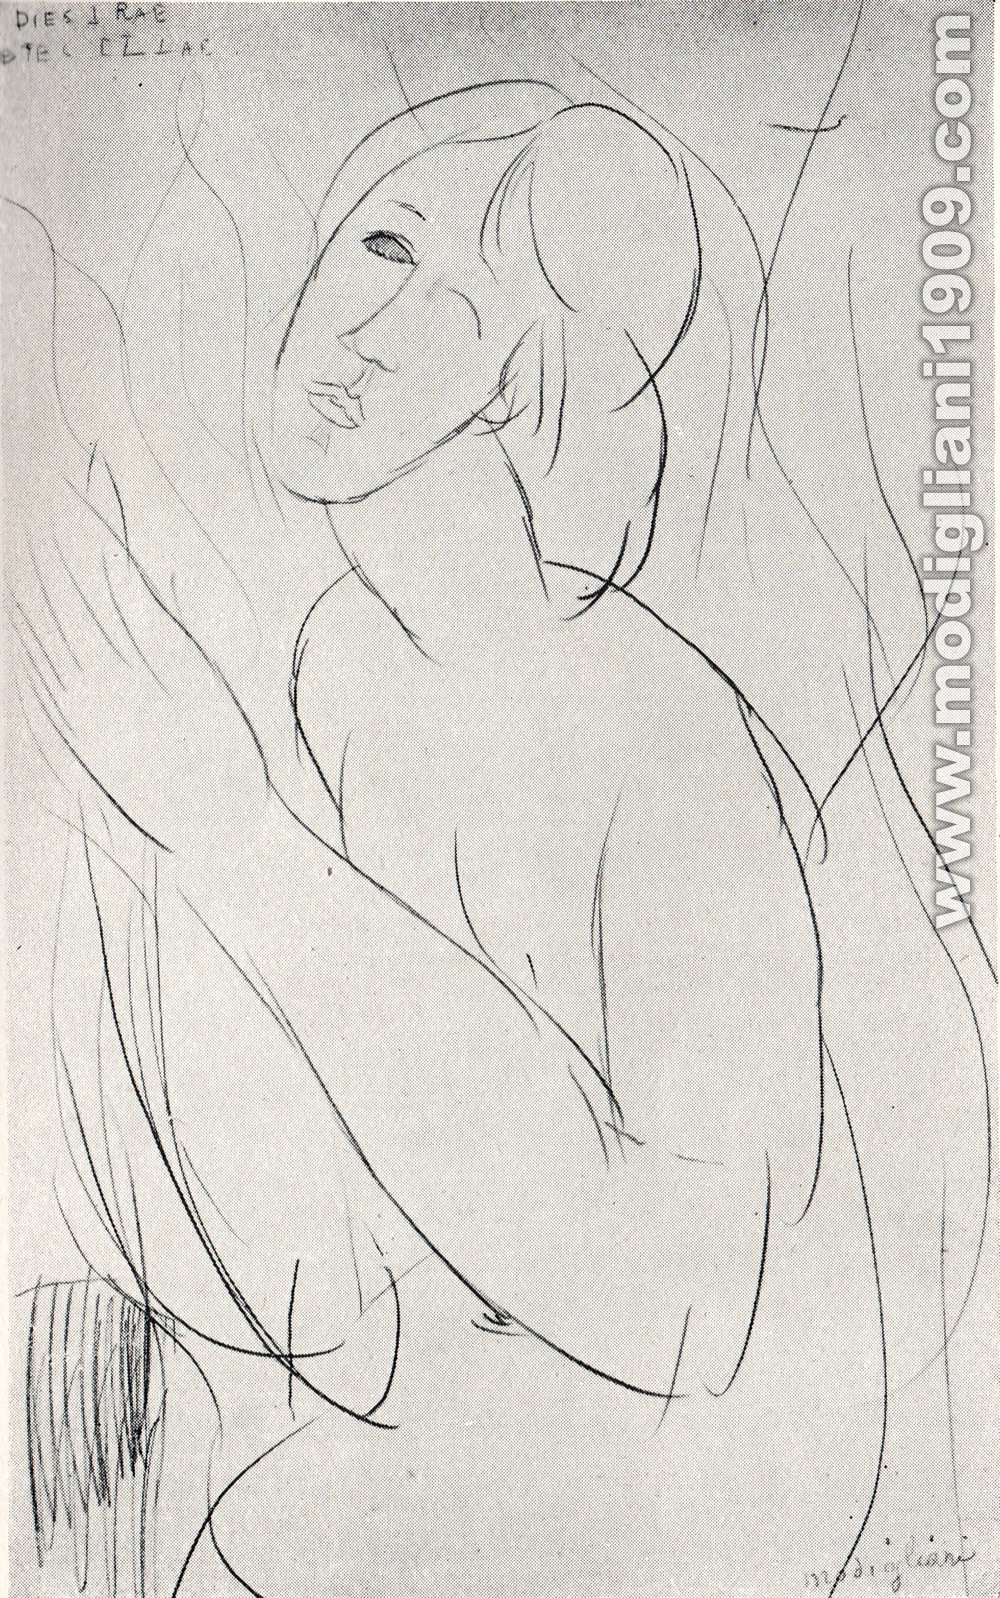 Amedeo Modigliani - DIES IRAE. DIES ILAE - 1918 - Parigi. Collezione Zborowski